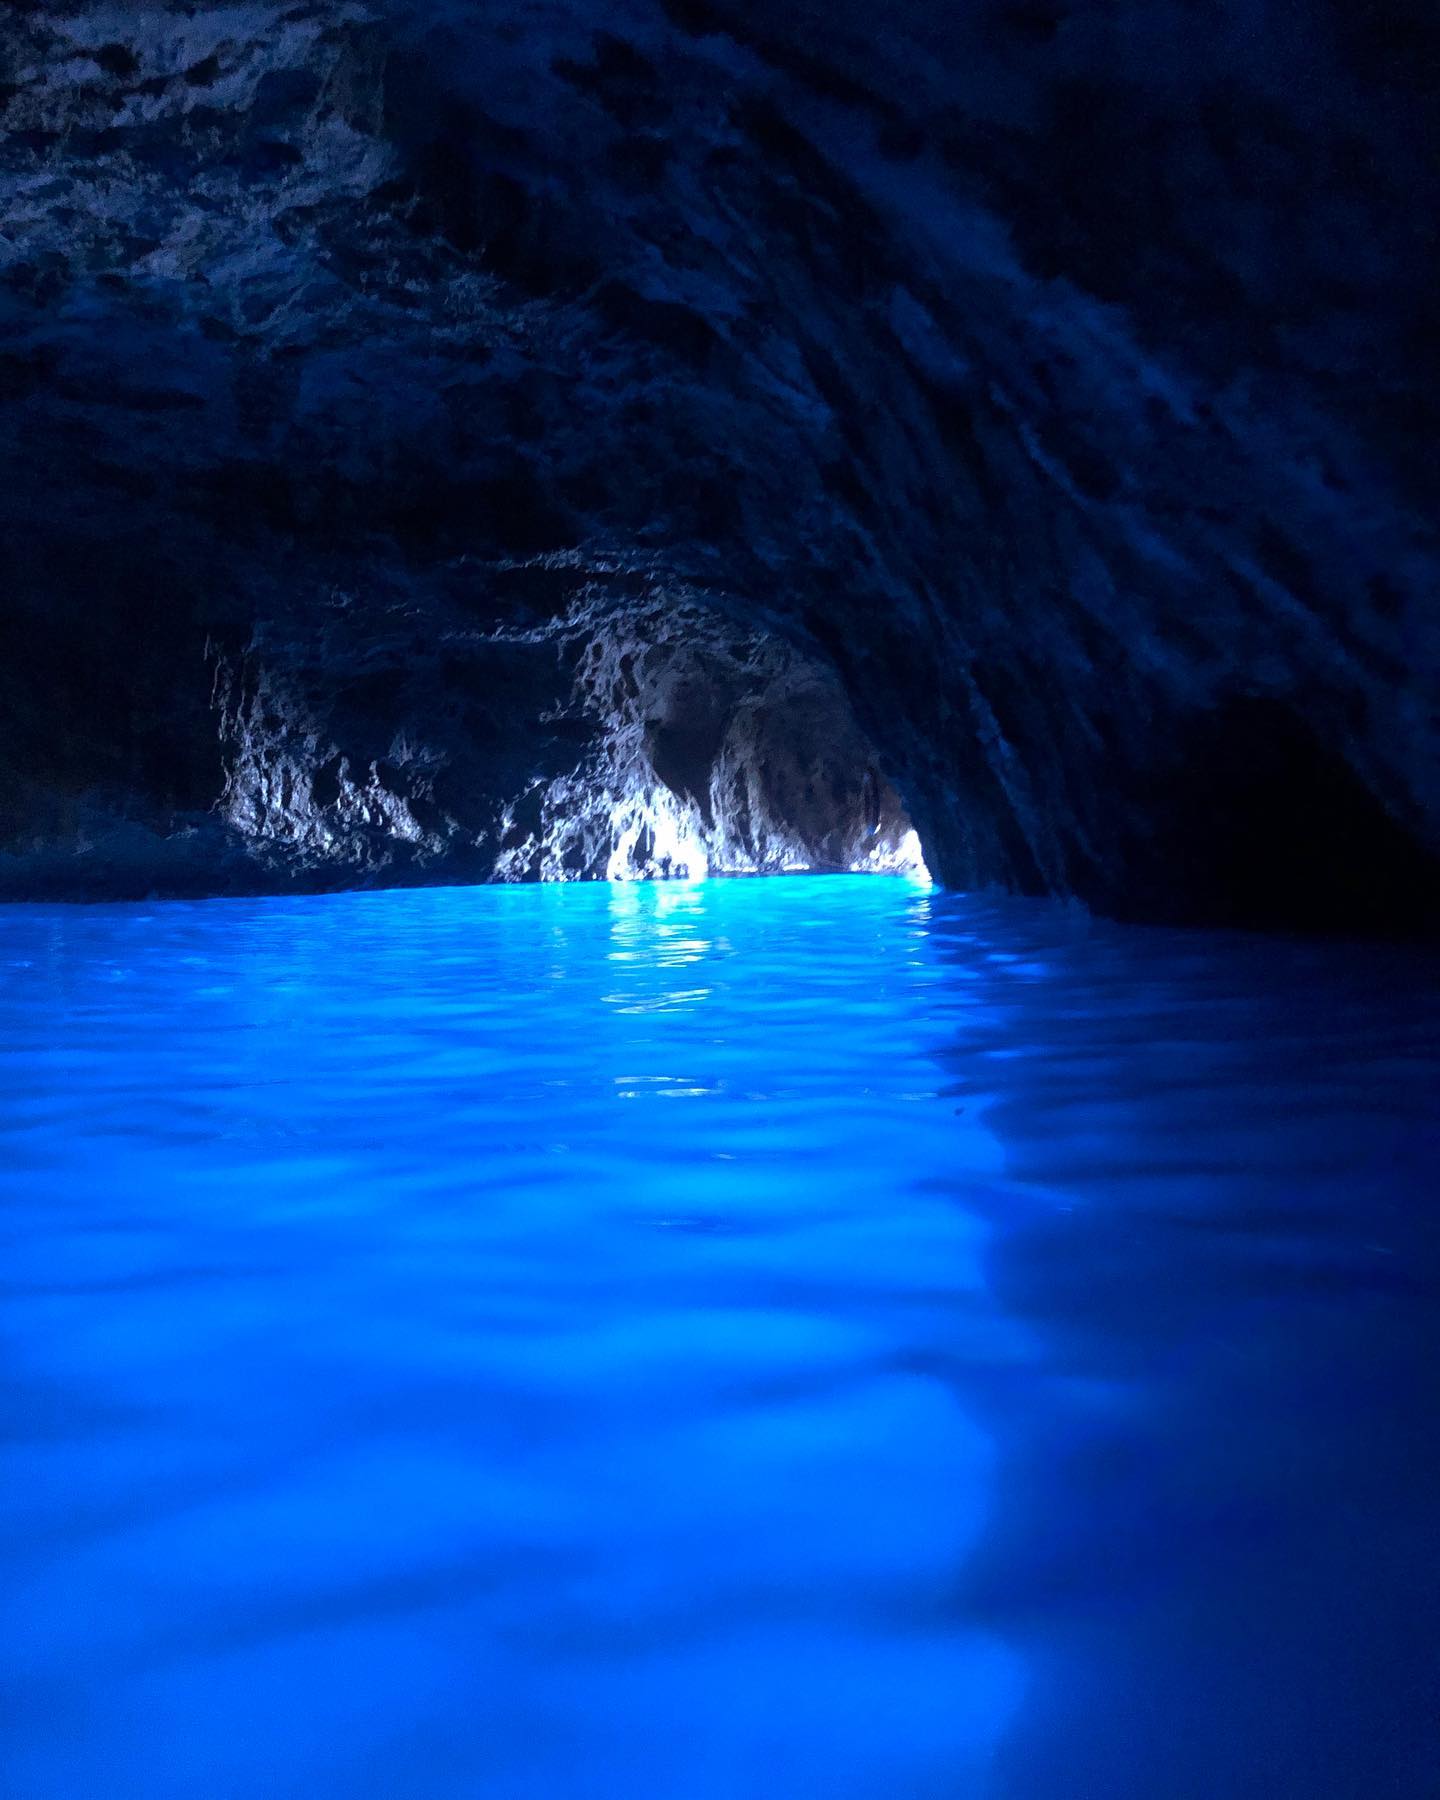 Sunlight passing through an underwater cavity and shining through the seawater creates a blue reflection that illuminates the cavern. #nofilter #outofcam
.
.
.
#lagrottaazzurra #grottaazzurra #grottaazzurracapri #bluegrotto #bluegrottocapri #blue #bluegrottoitaly
#capri #capriitaly #capriamalfi #capriamalficoast #amalfi #amalficoast #amalfiküste #amalficoastitaly #amalfitancoast #amalficoast_italy #positano #faraglioni #faraglionirocks #faraglionidicapri #faraglionidiscopello #faraglionicapri #italia #italy #italycapri